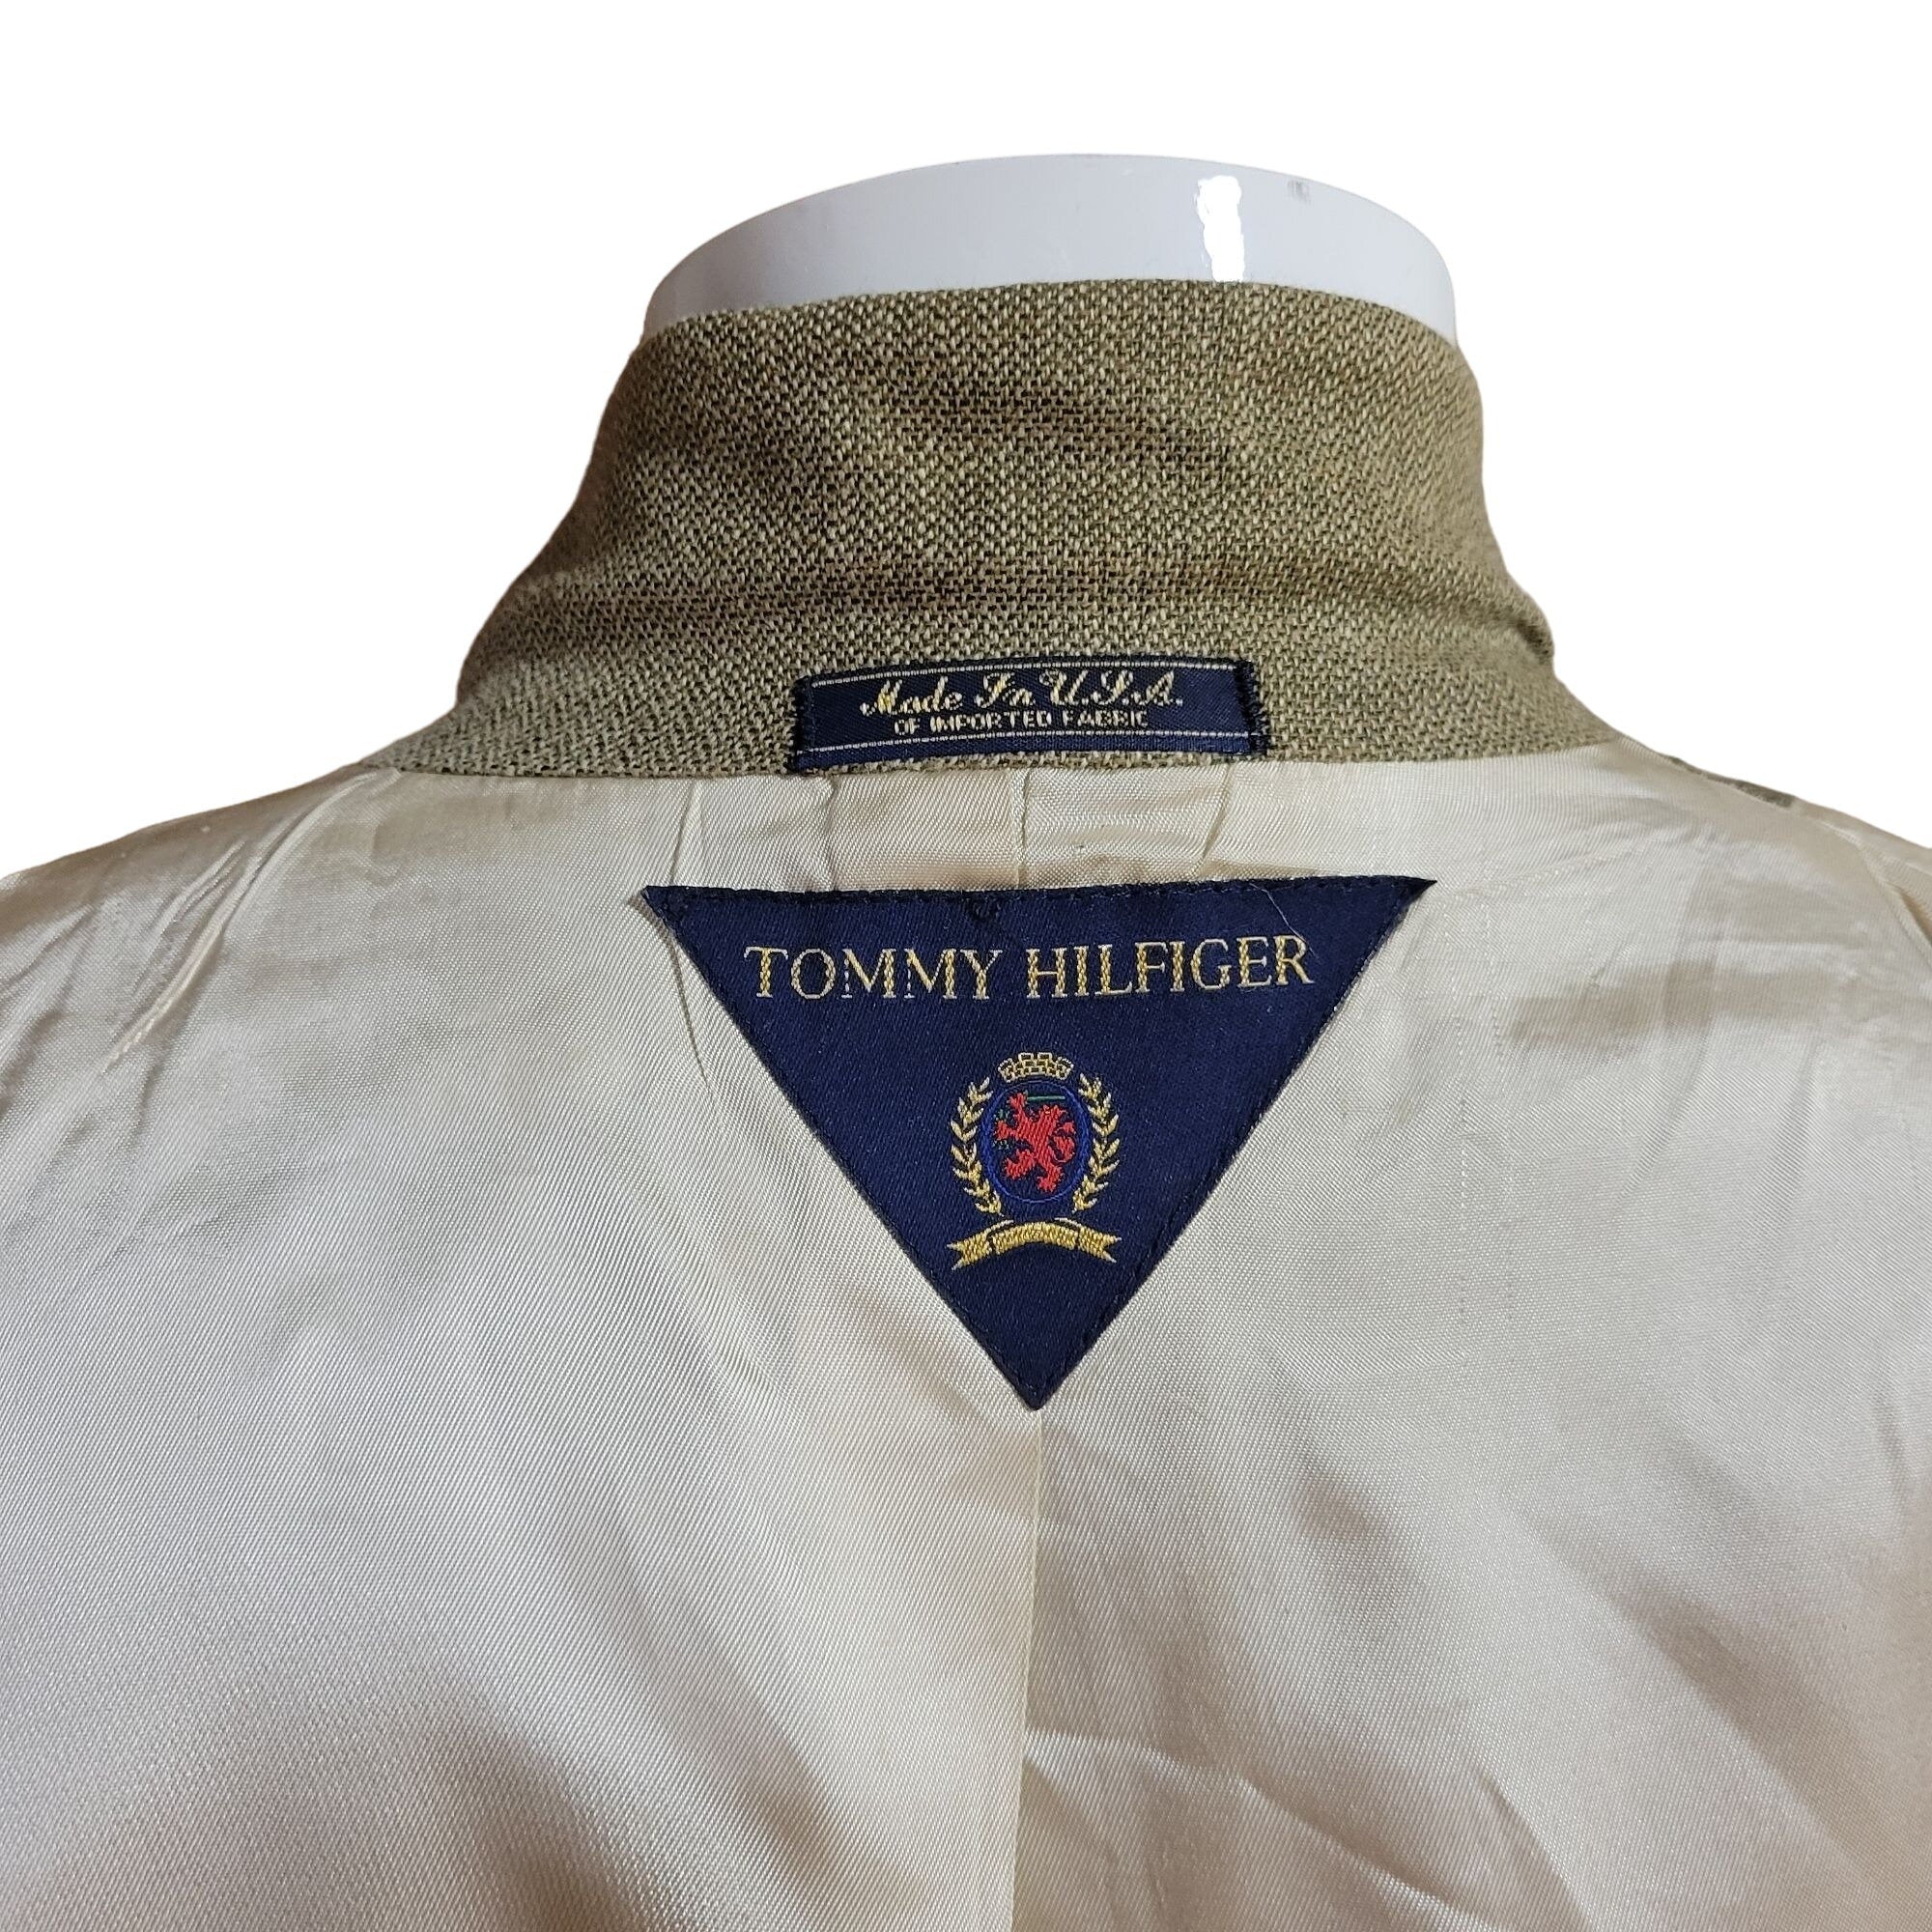 Tommy Hilfiger Men's Blazer, Size 44 L.